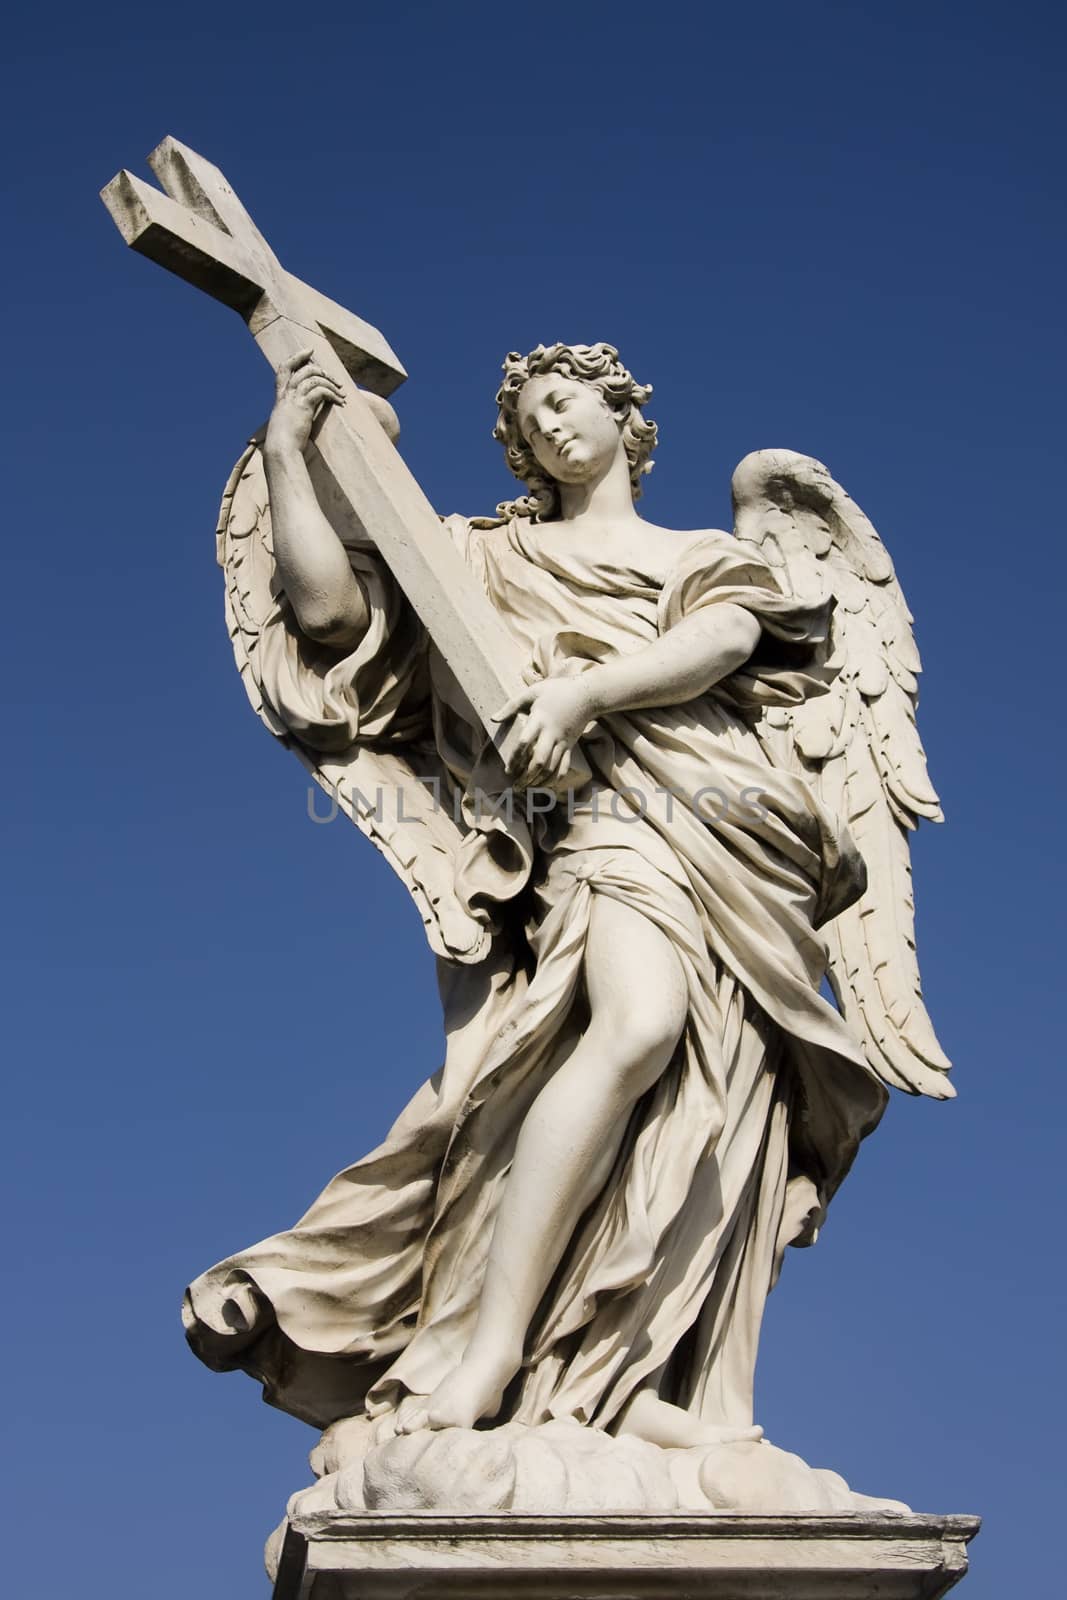 Statue of an angel on the Sant Angelo Bridge in Rome by fotoecho